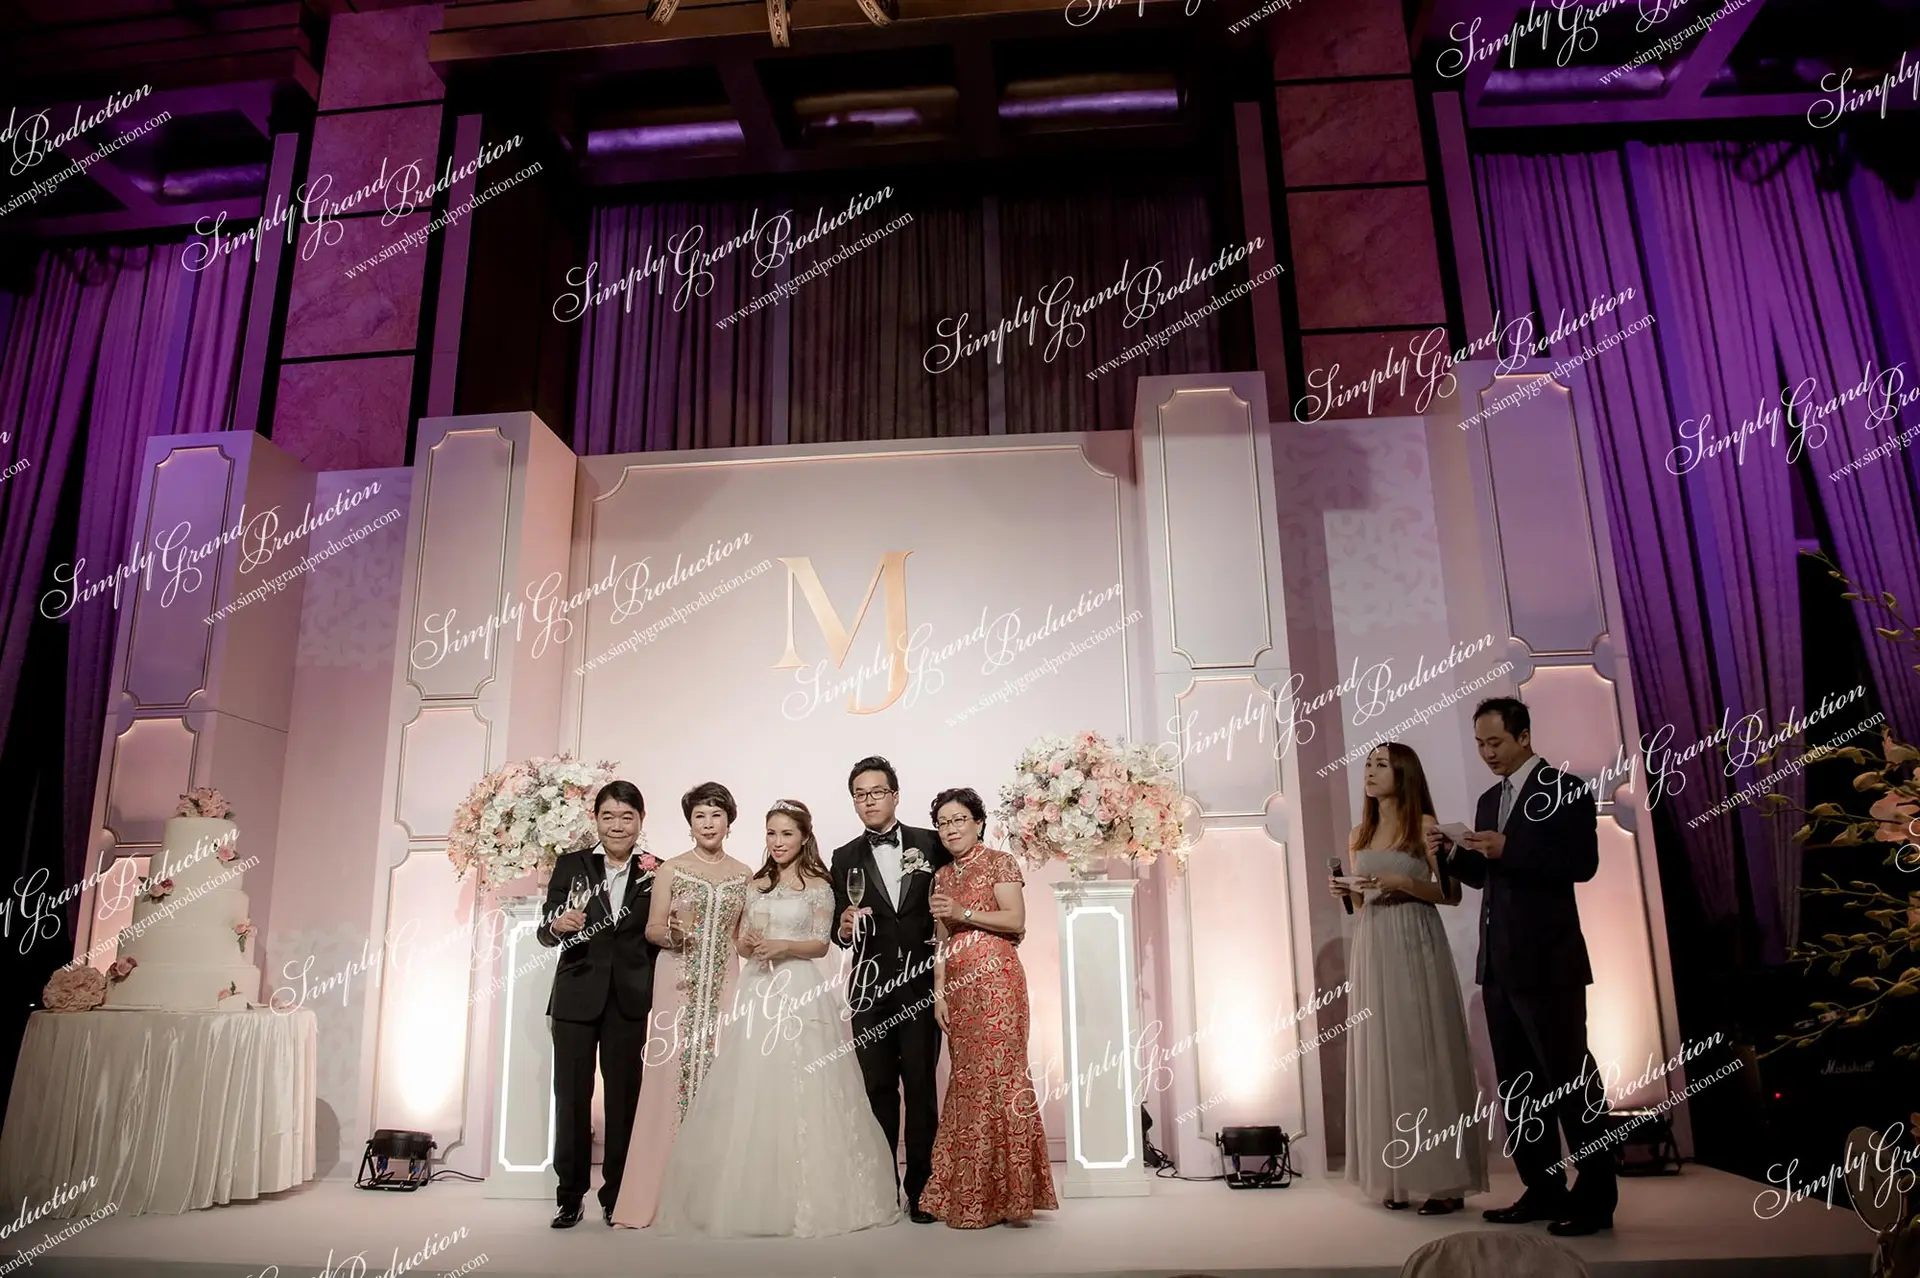 Simply_Grand_Production_ballroom_wedding_decoration_bigday_family_love_Four_Seasons_1_9